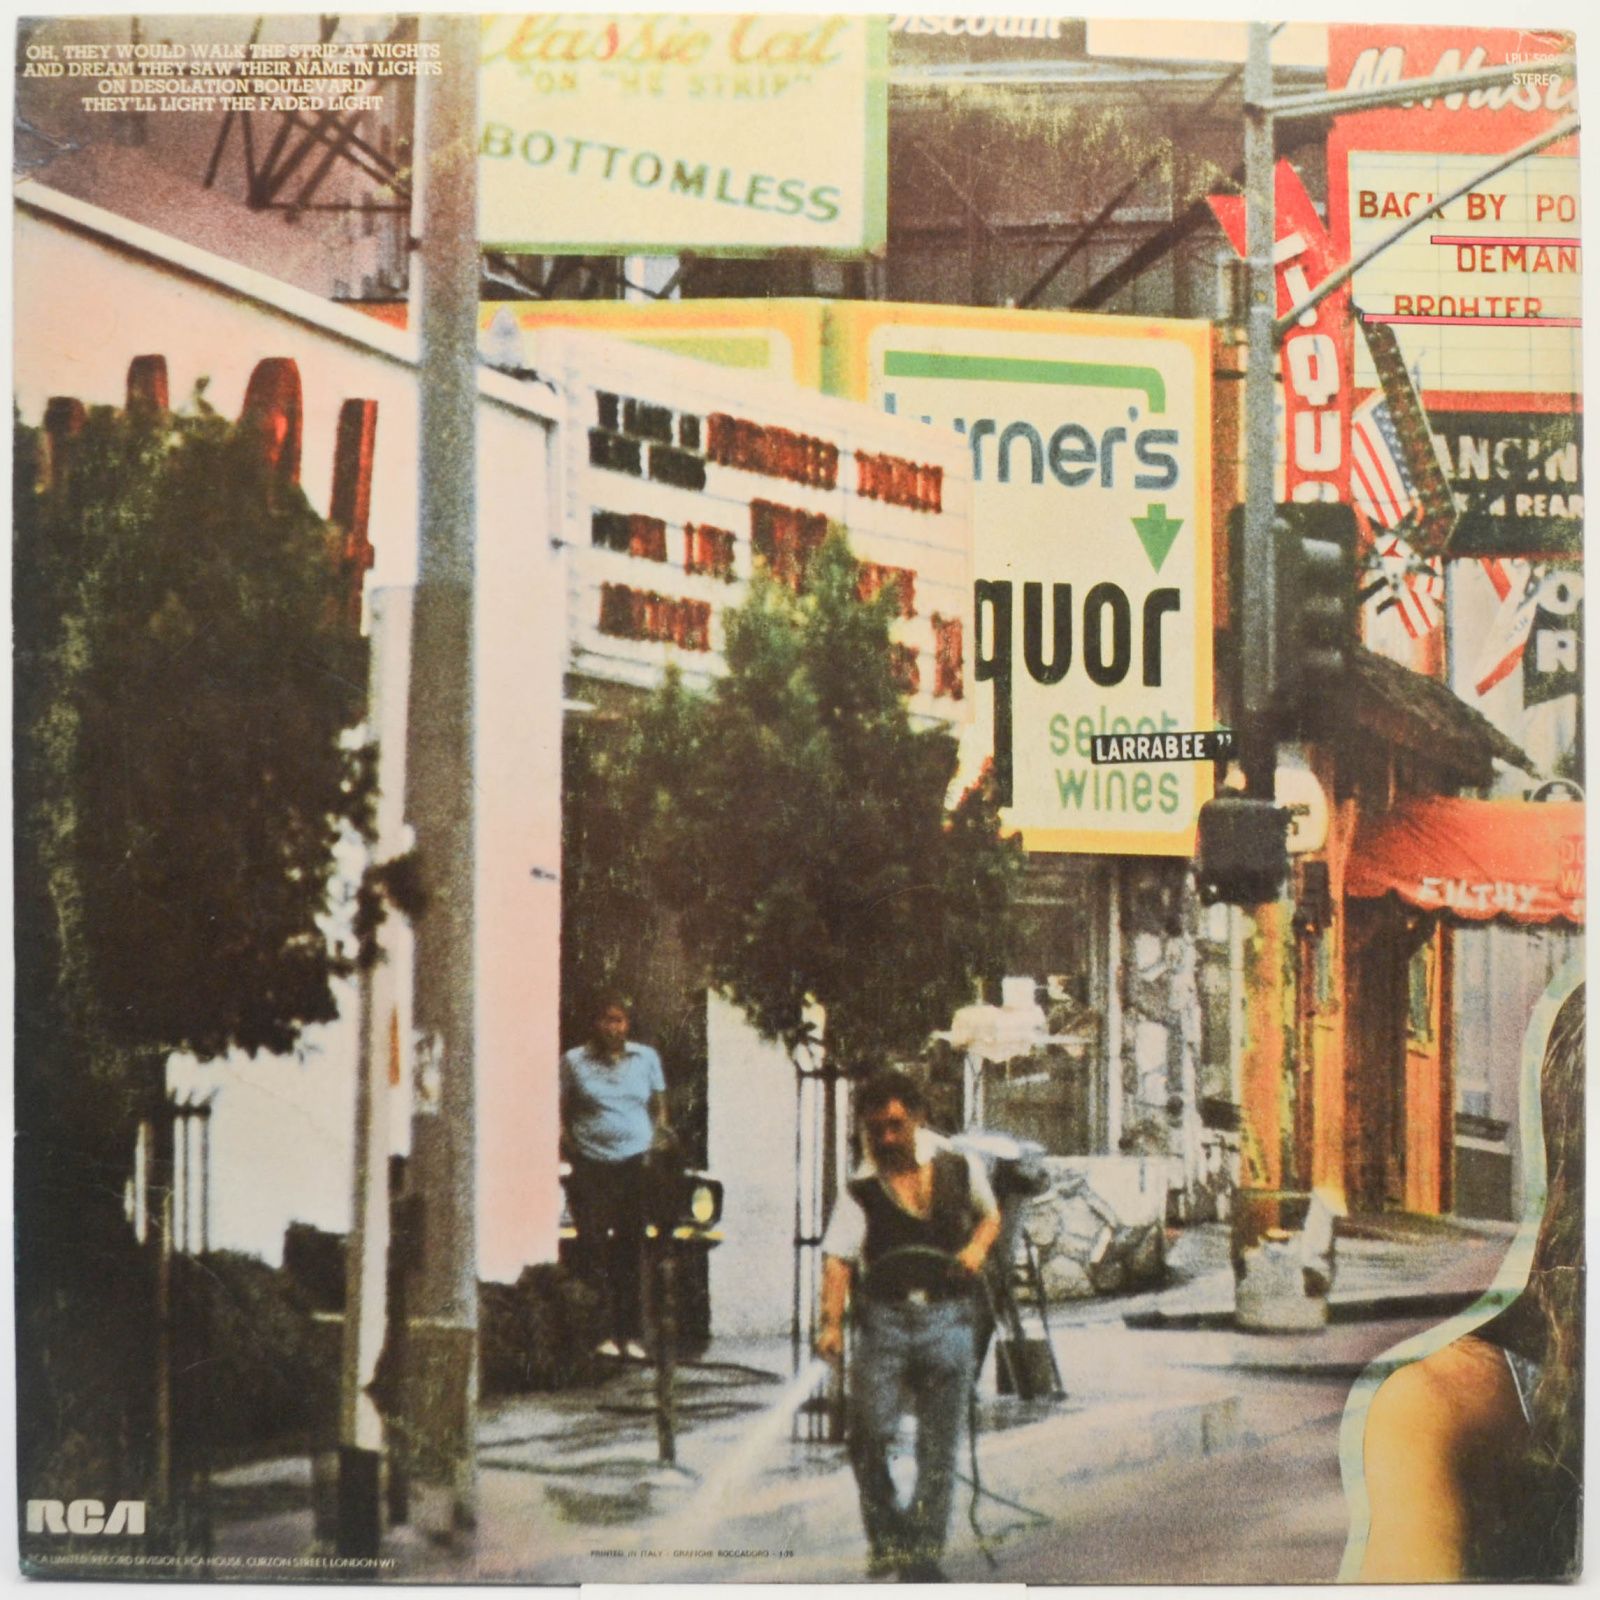 Sweet — Desolation Boulevard, 1974